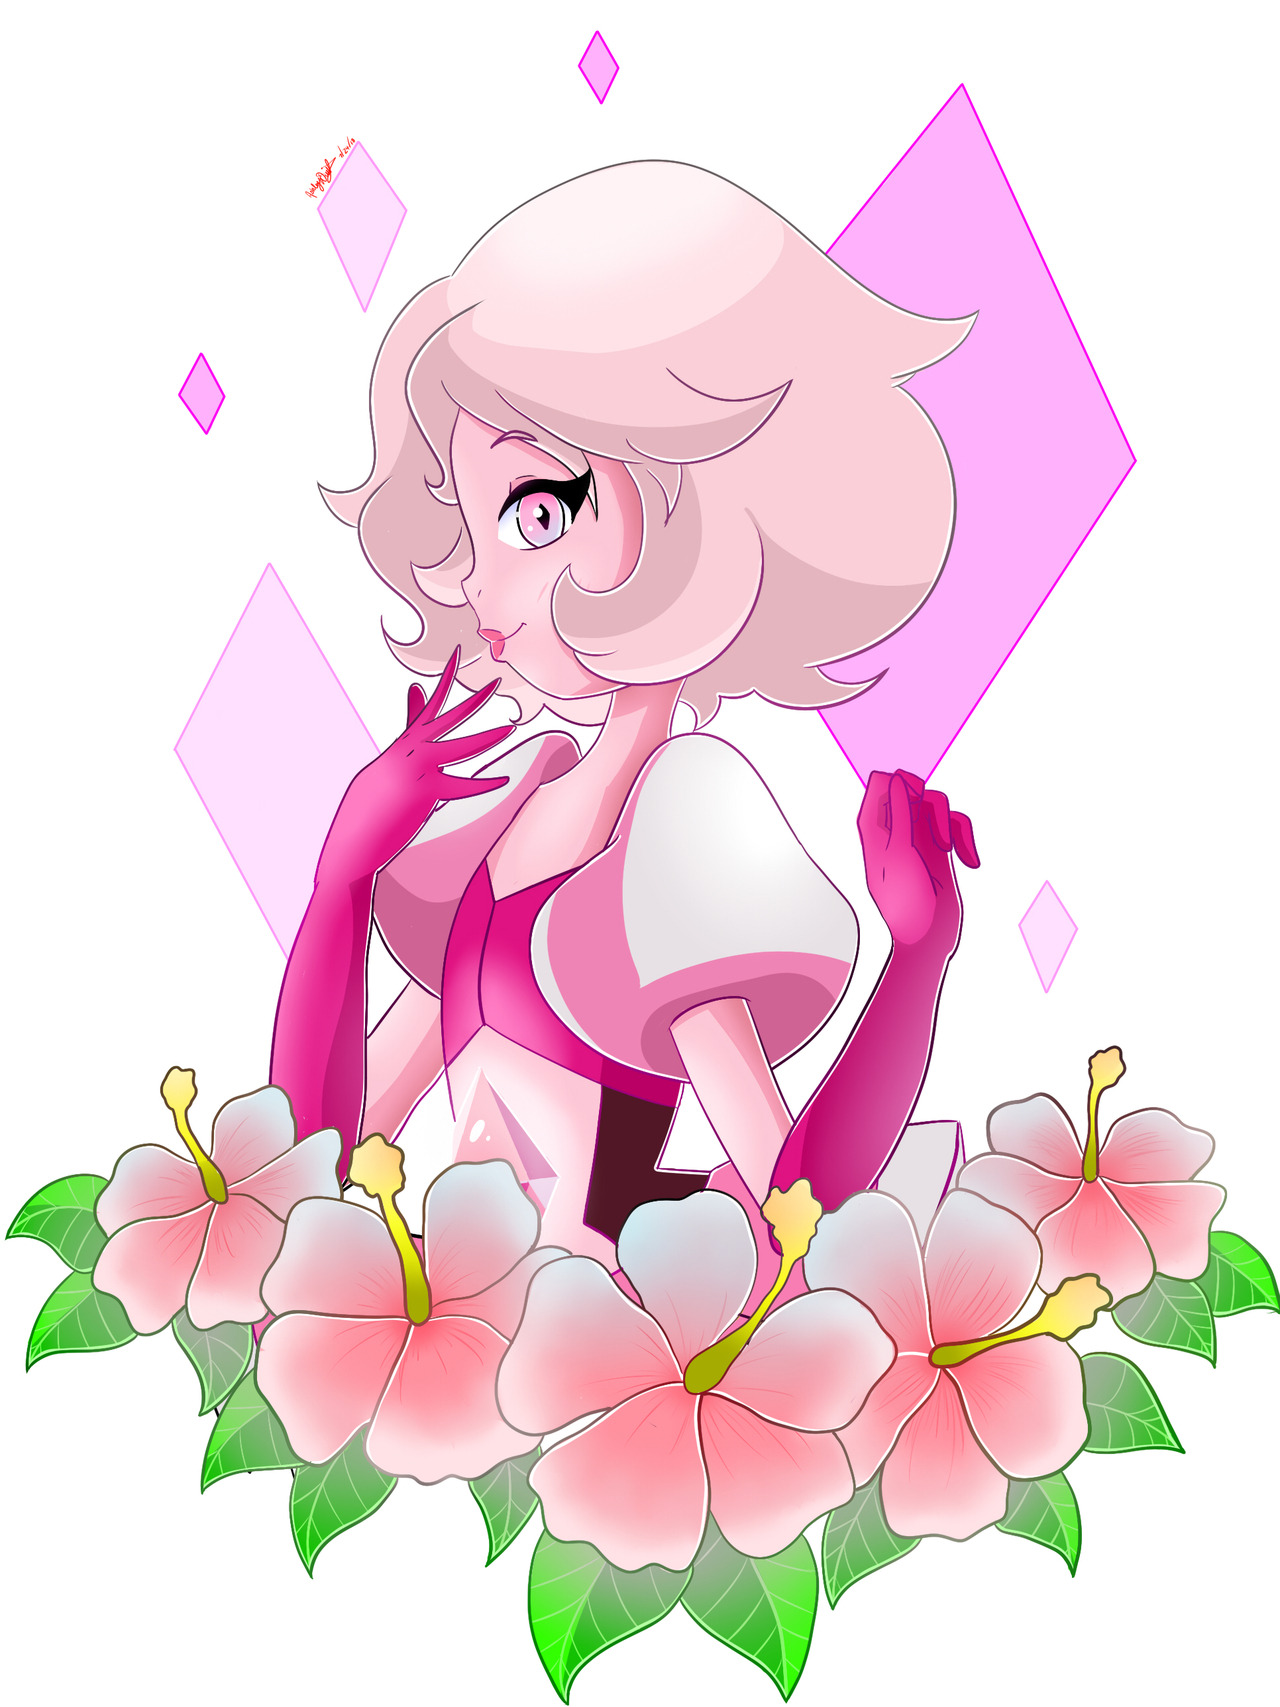 Pink Diamond is so adorable!!!